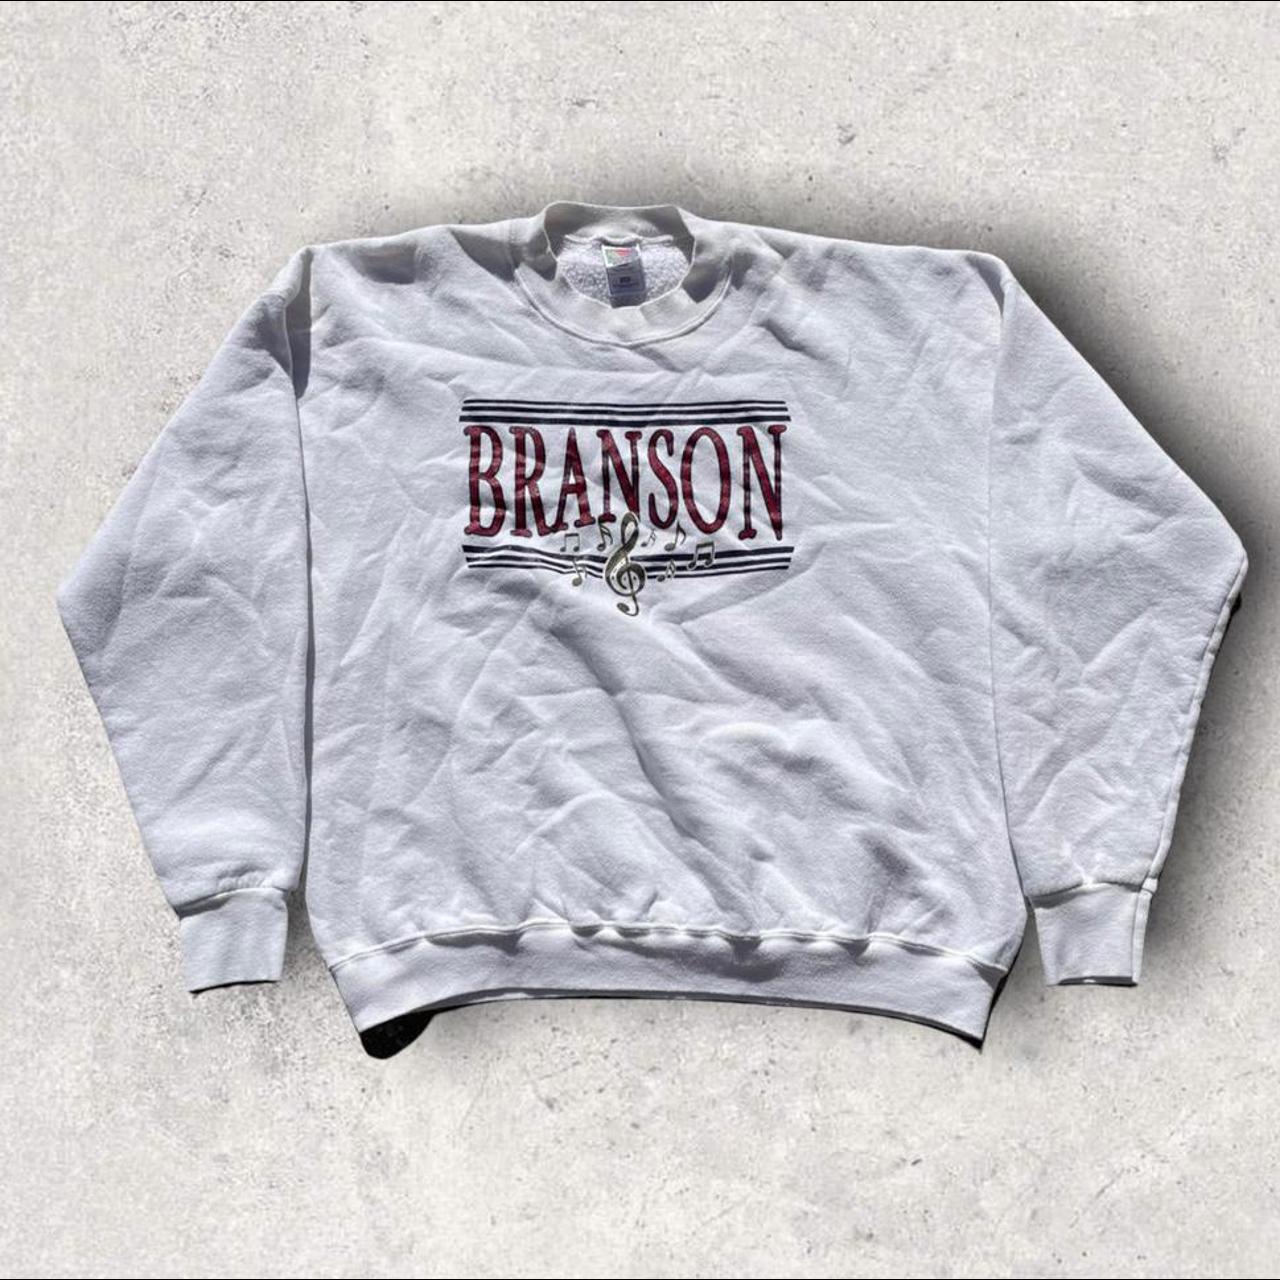 Product Image 1 - 90s Branson Missouri Crewneck Sweatshirt
Size